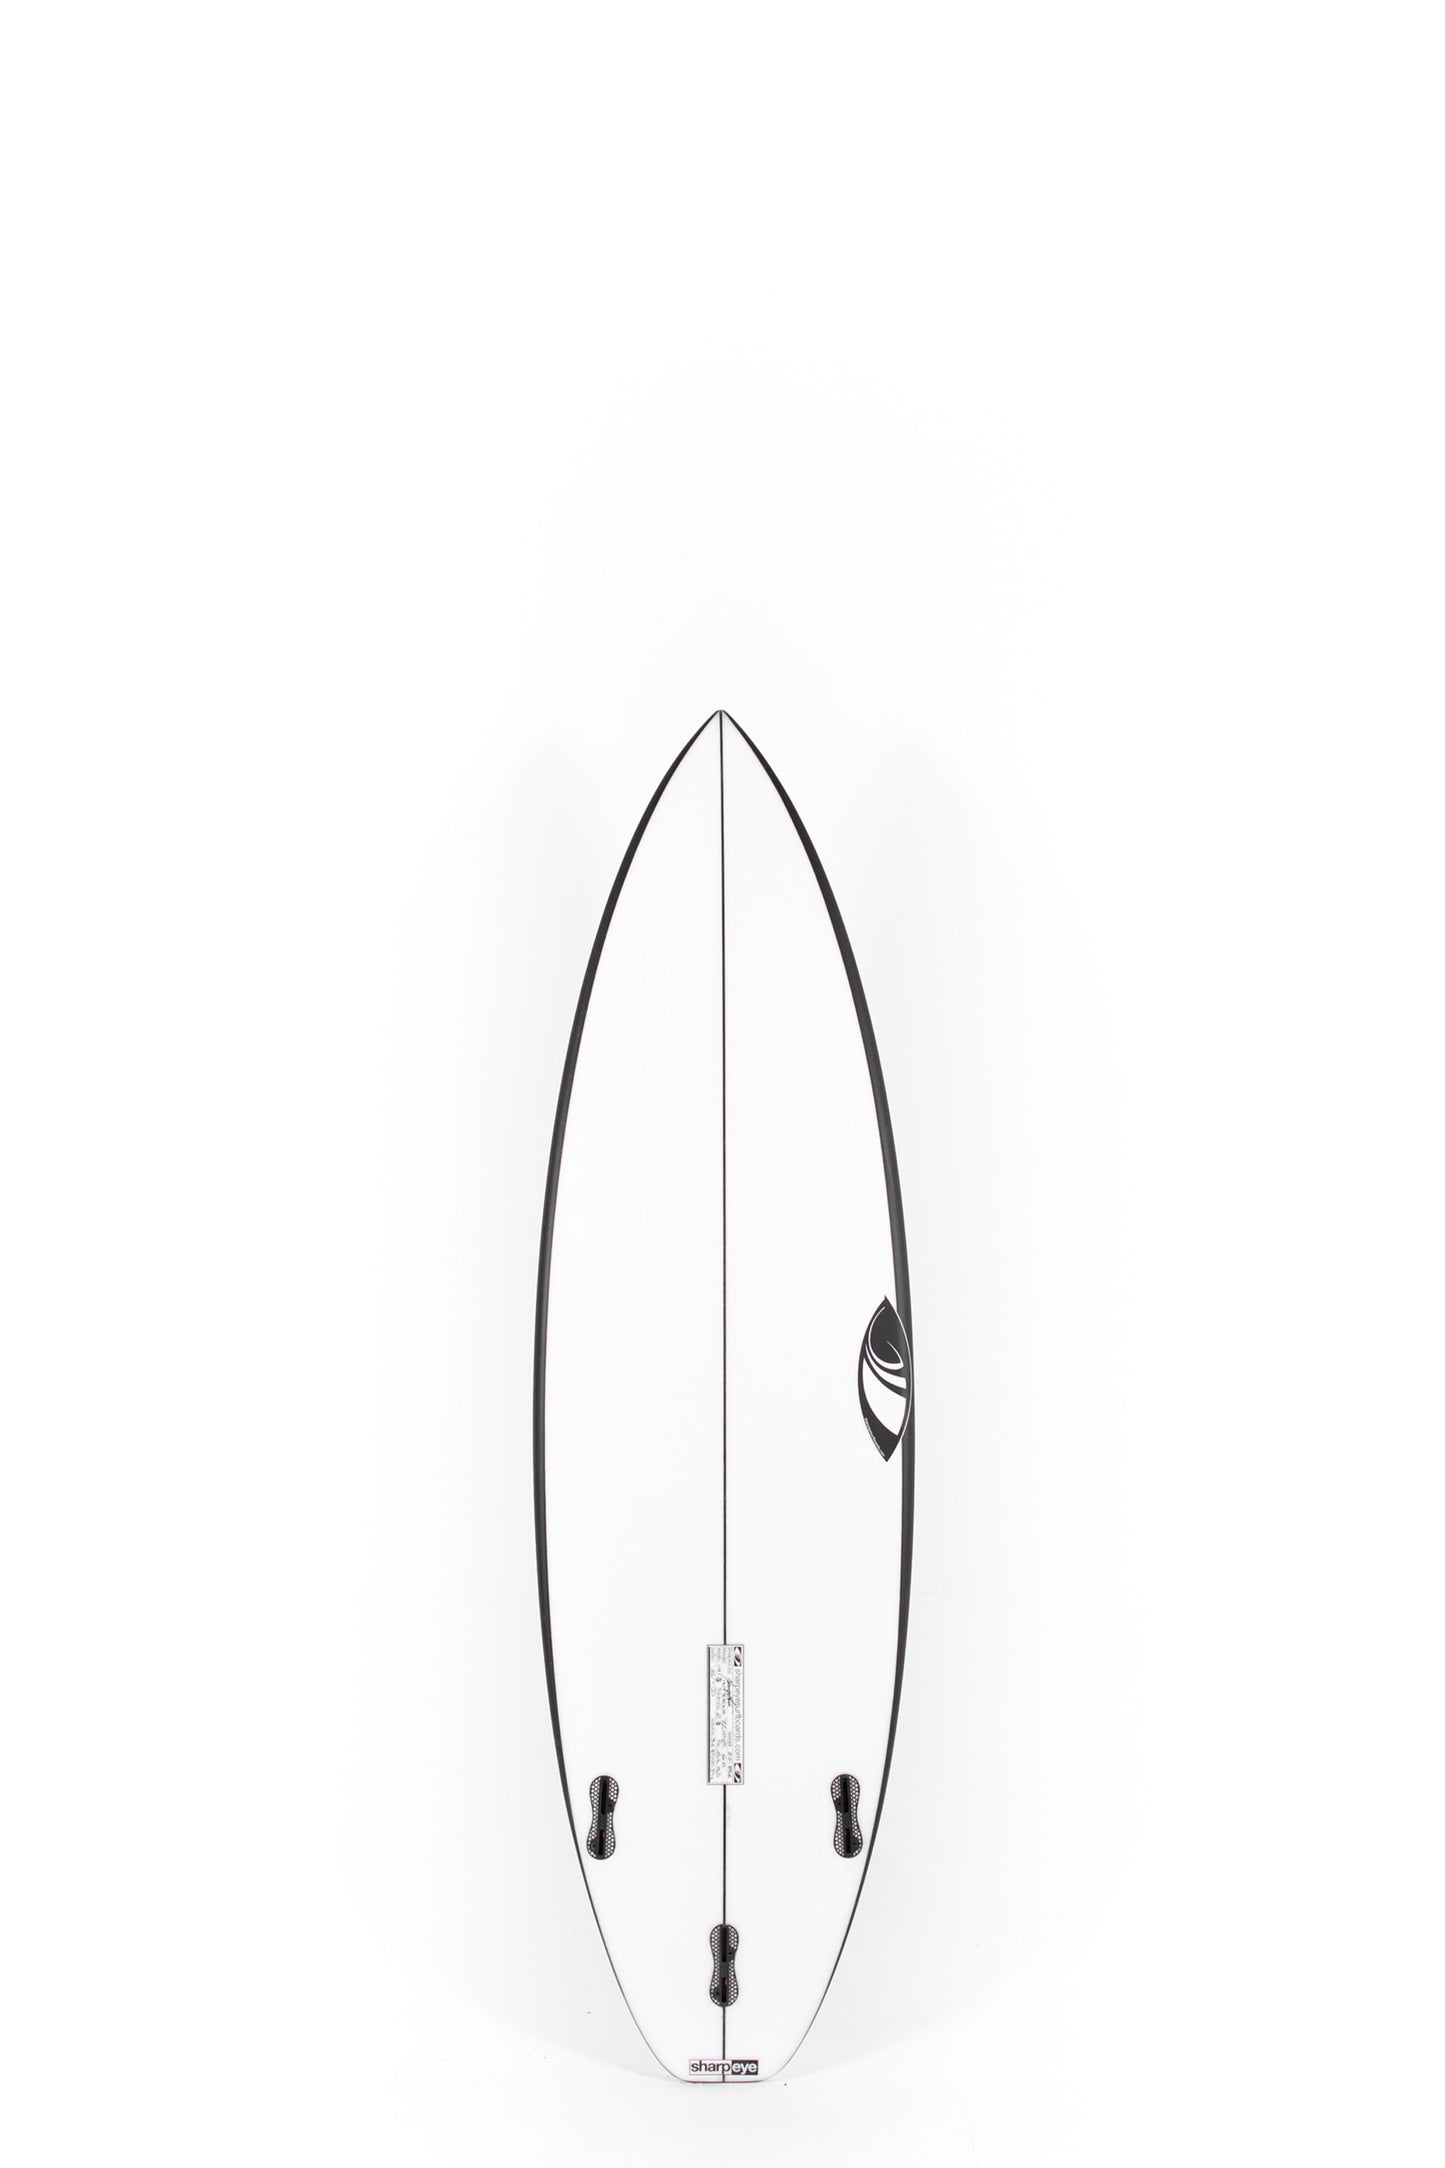 Pukas Surf Shop - Sharpeye Surfboards - INFERNO 72 PRO by Marcio Zouvi - 6'0" x 19 3/8 x 2 5/8 - 30.9L - INFERNOPRO